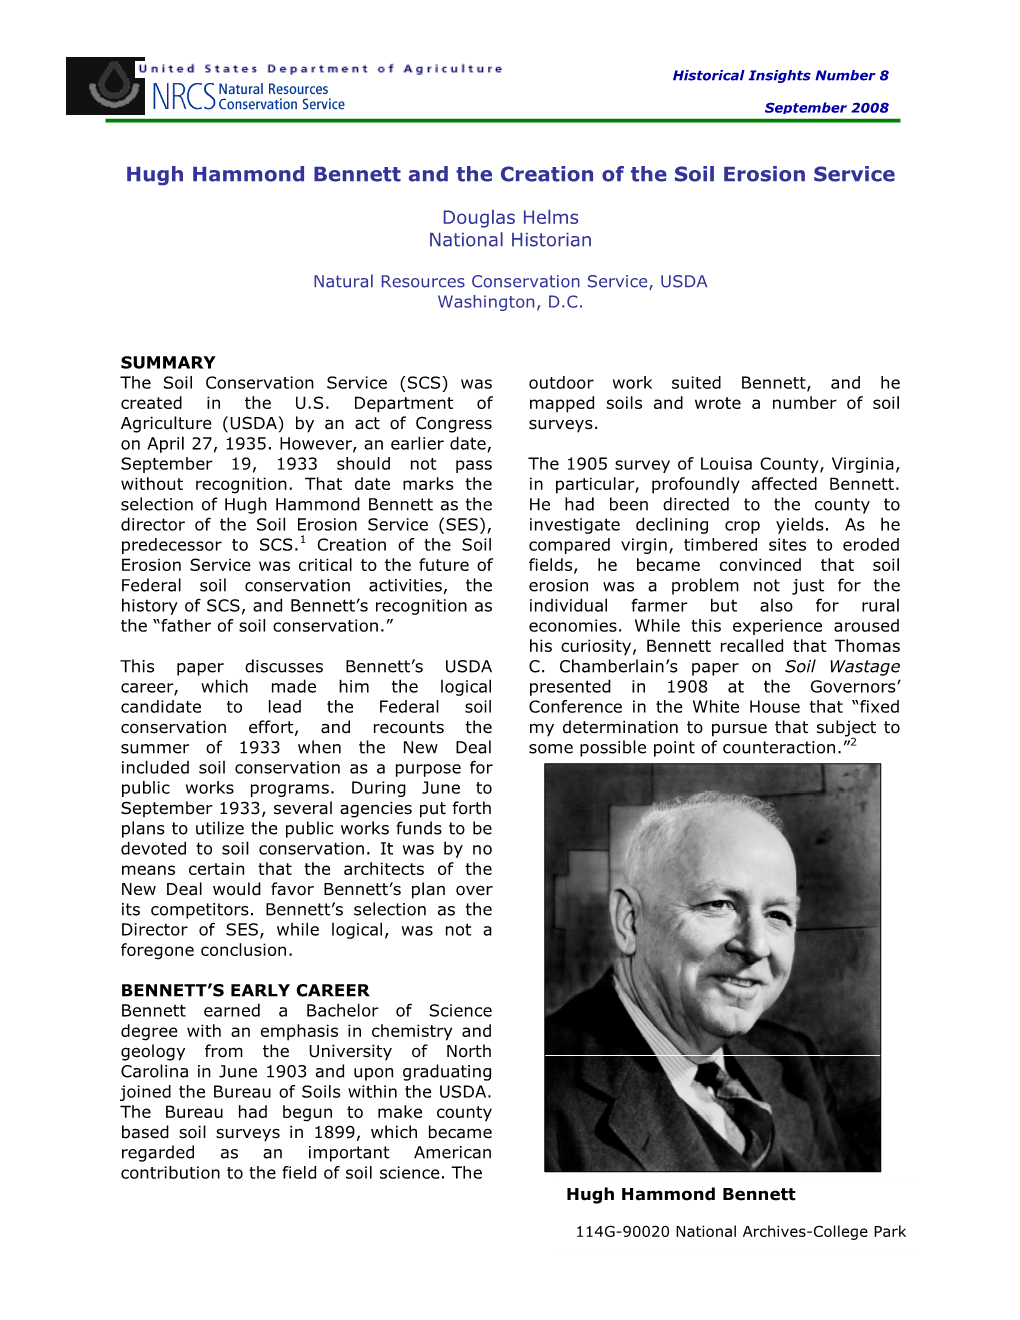 Hugh Hammond Bennett and the Creation of the Soil Erosion Service